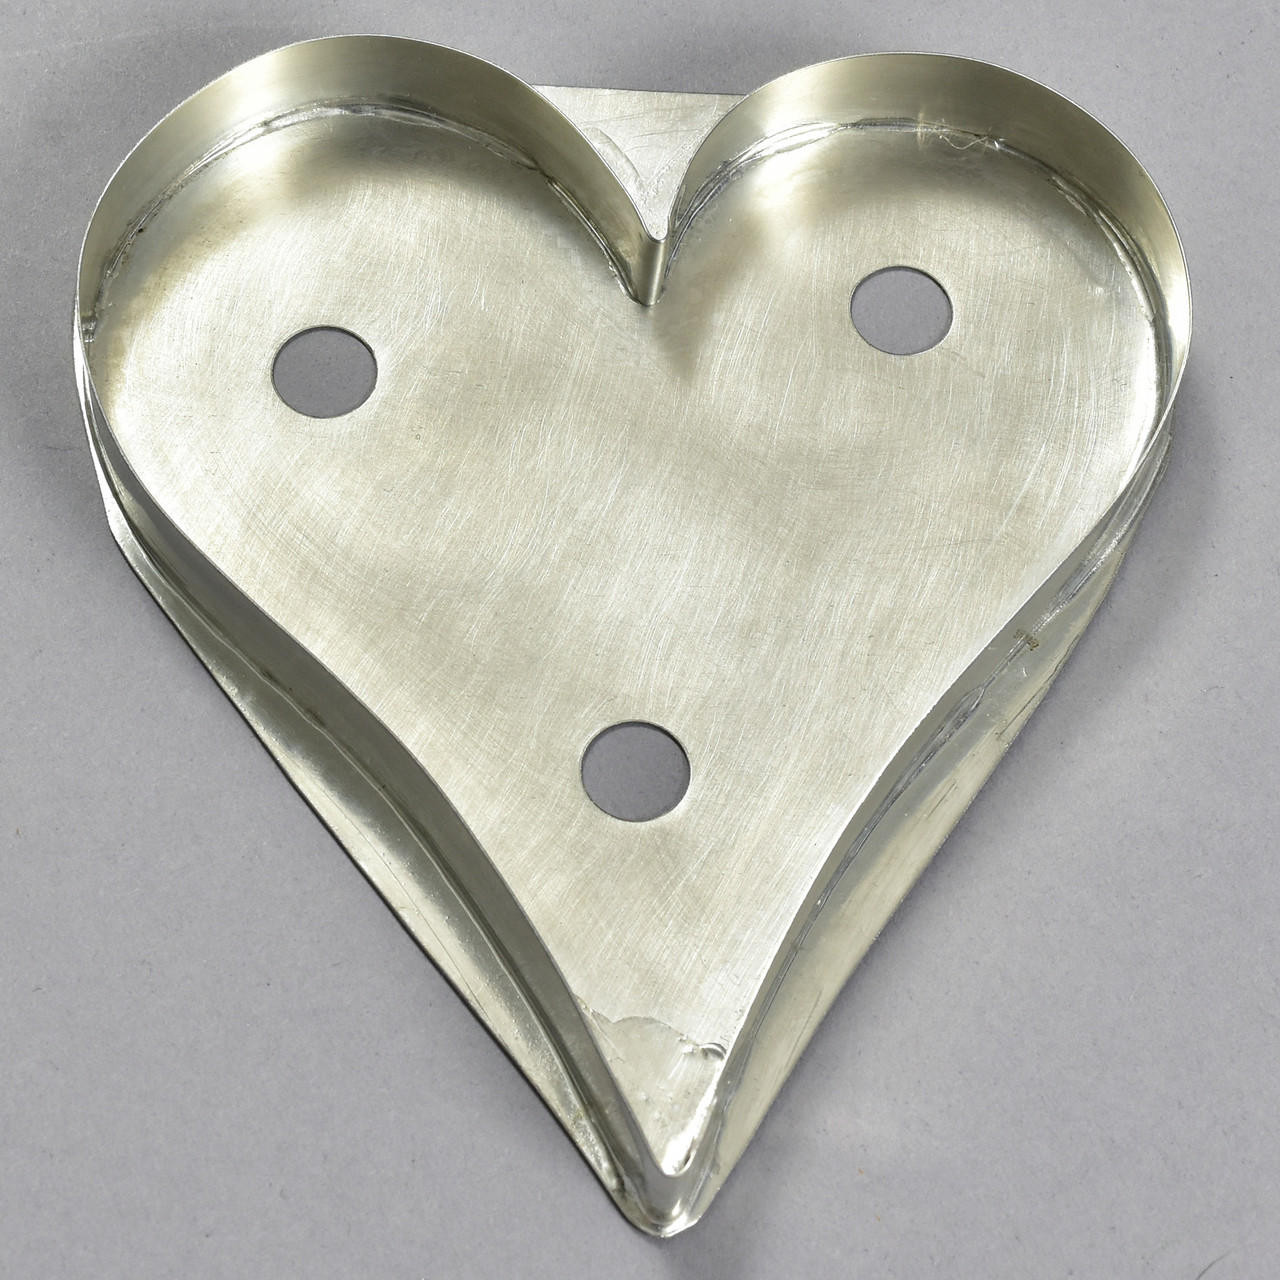 Heart Cookie Cutter Tin Reproduction 1860 - 1890 by Karen Hurd -  Philadelphia Museum Of Art